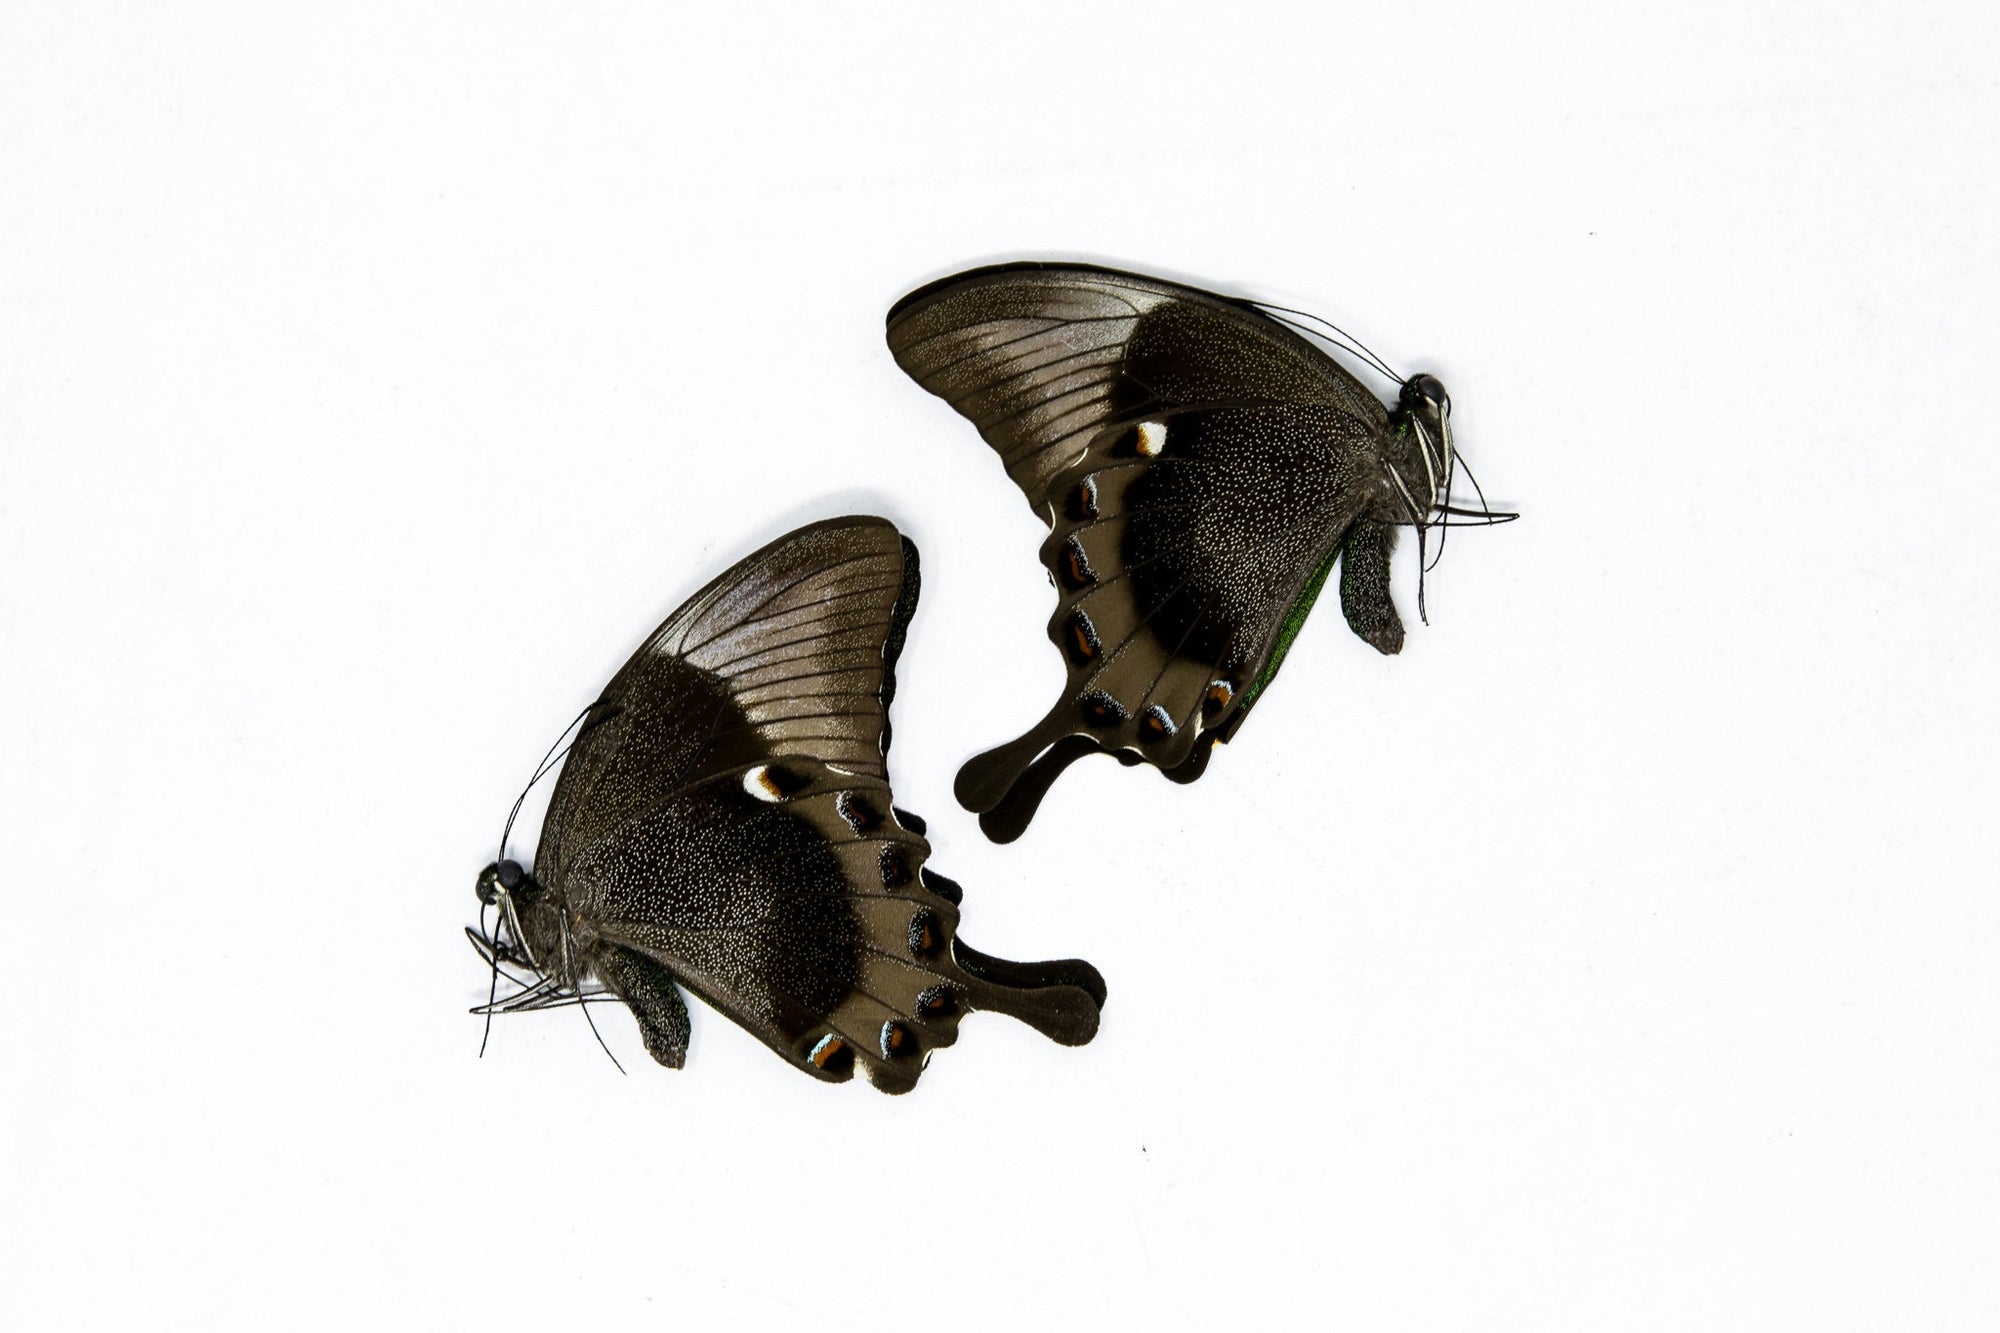 2 x Papilio palinurus daedalus | A1 Unmounted Specimens